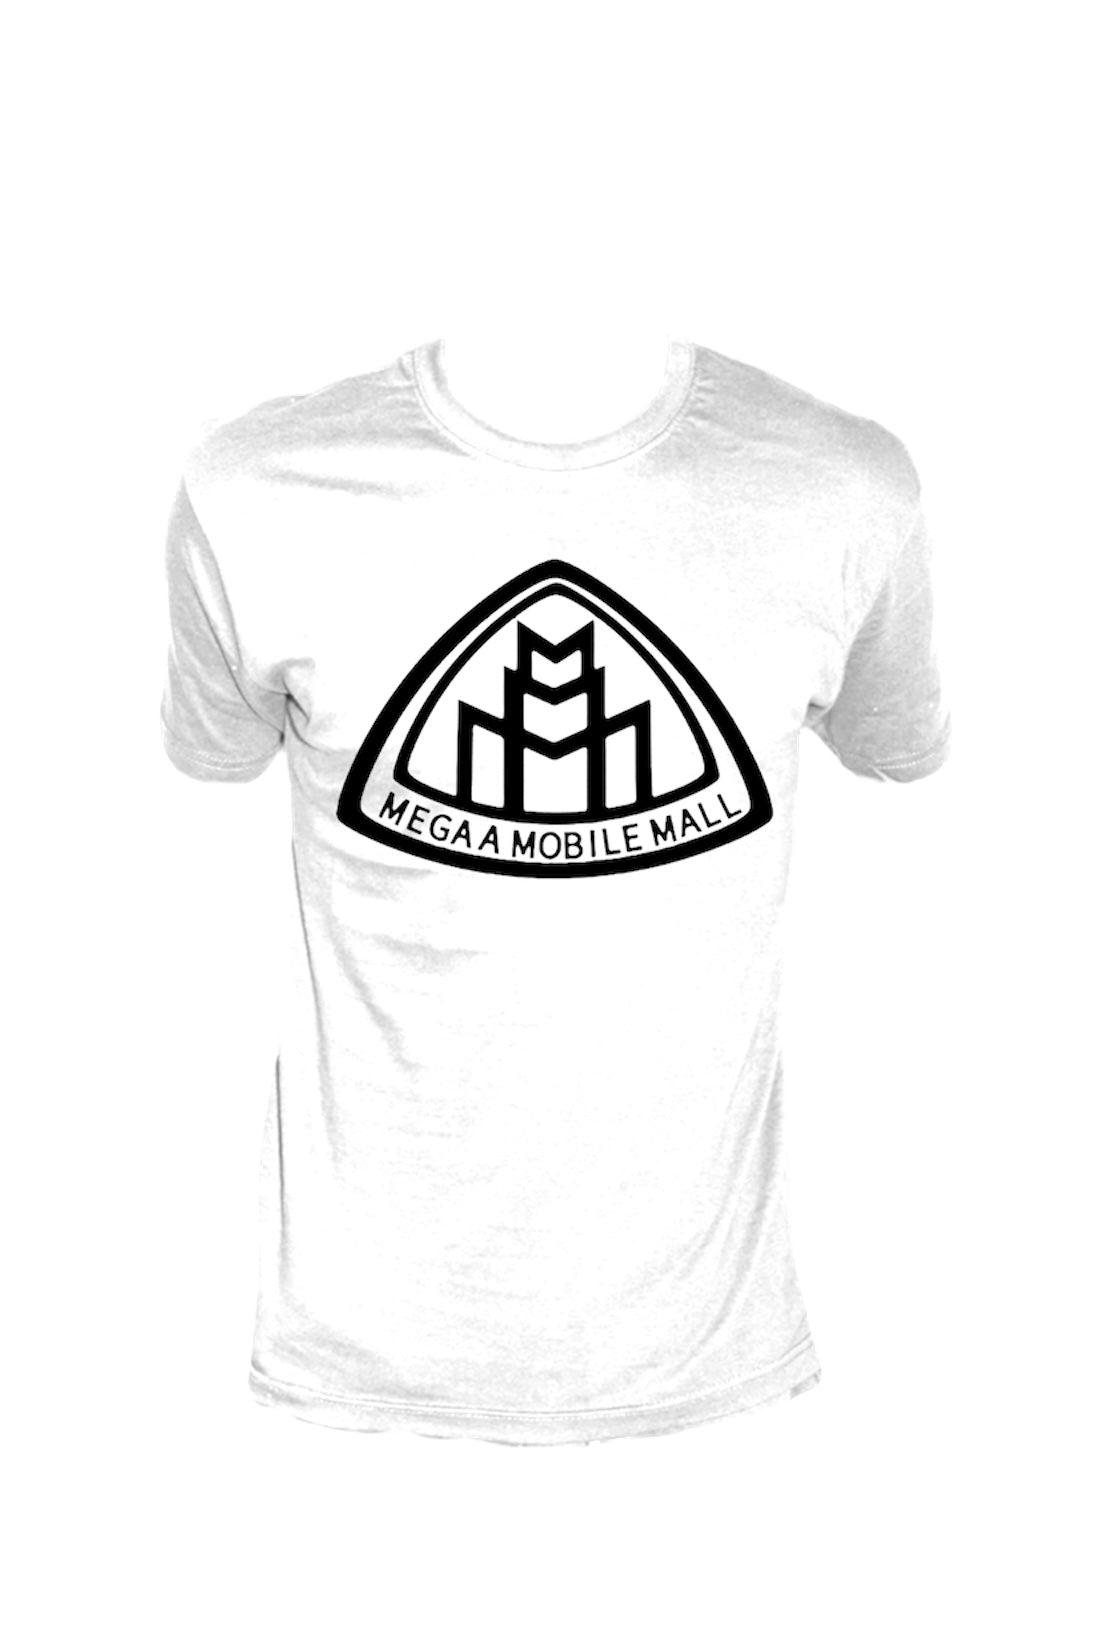 megaamobilemall Logo Shirt black logo